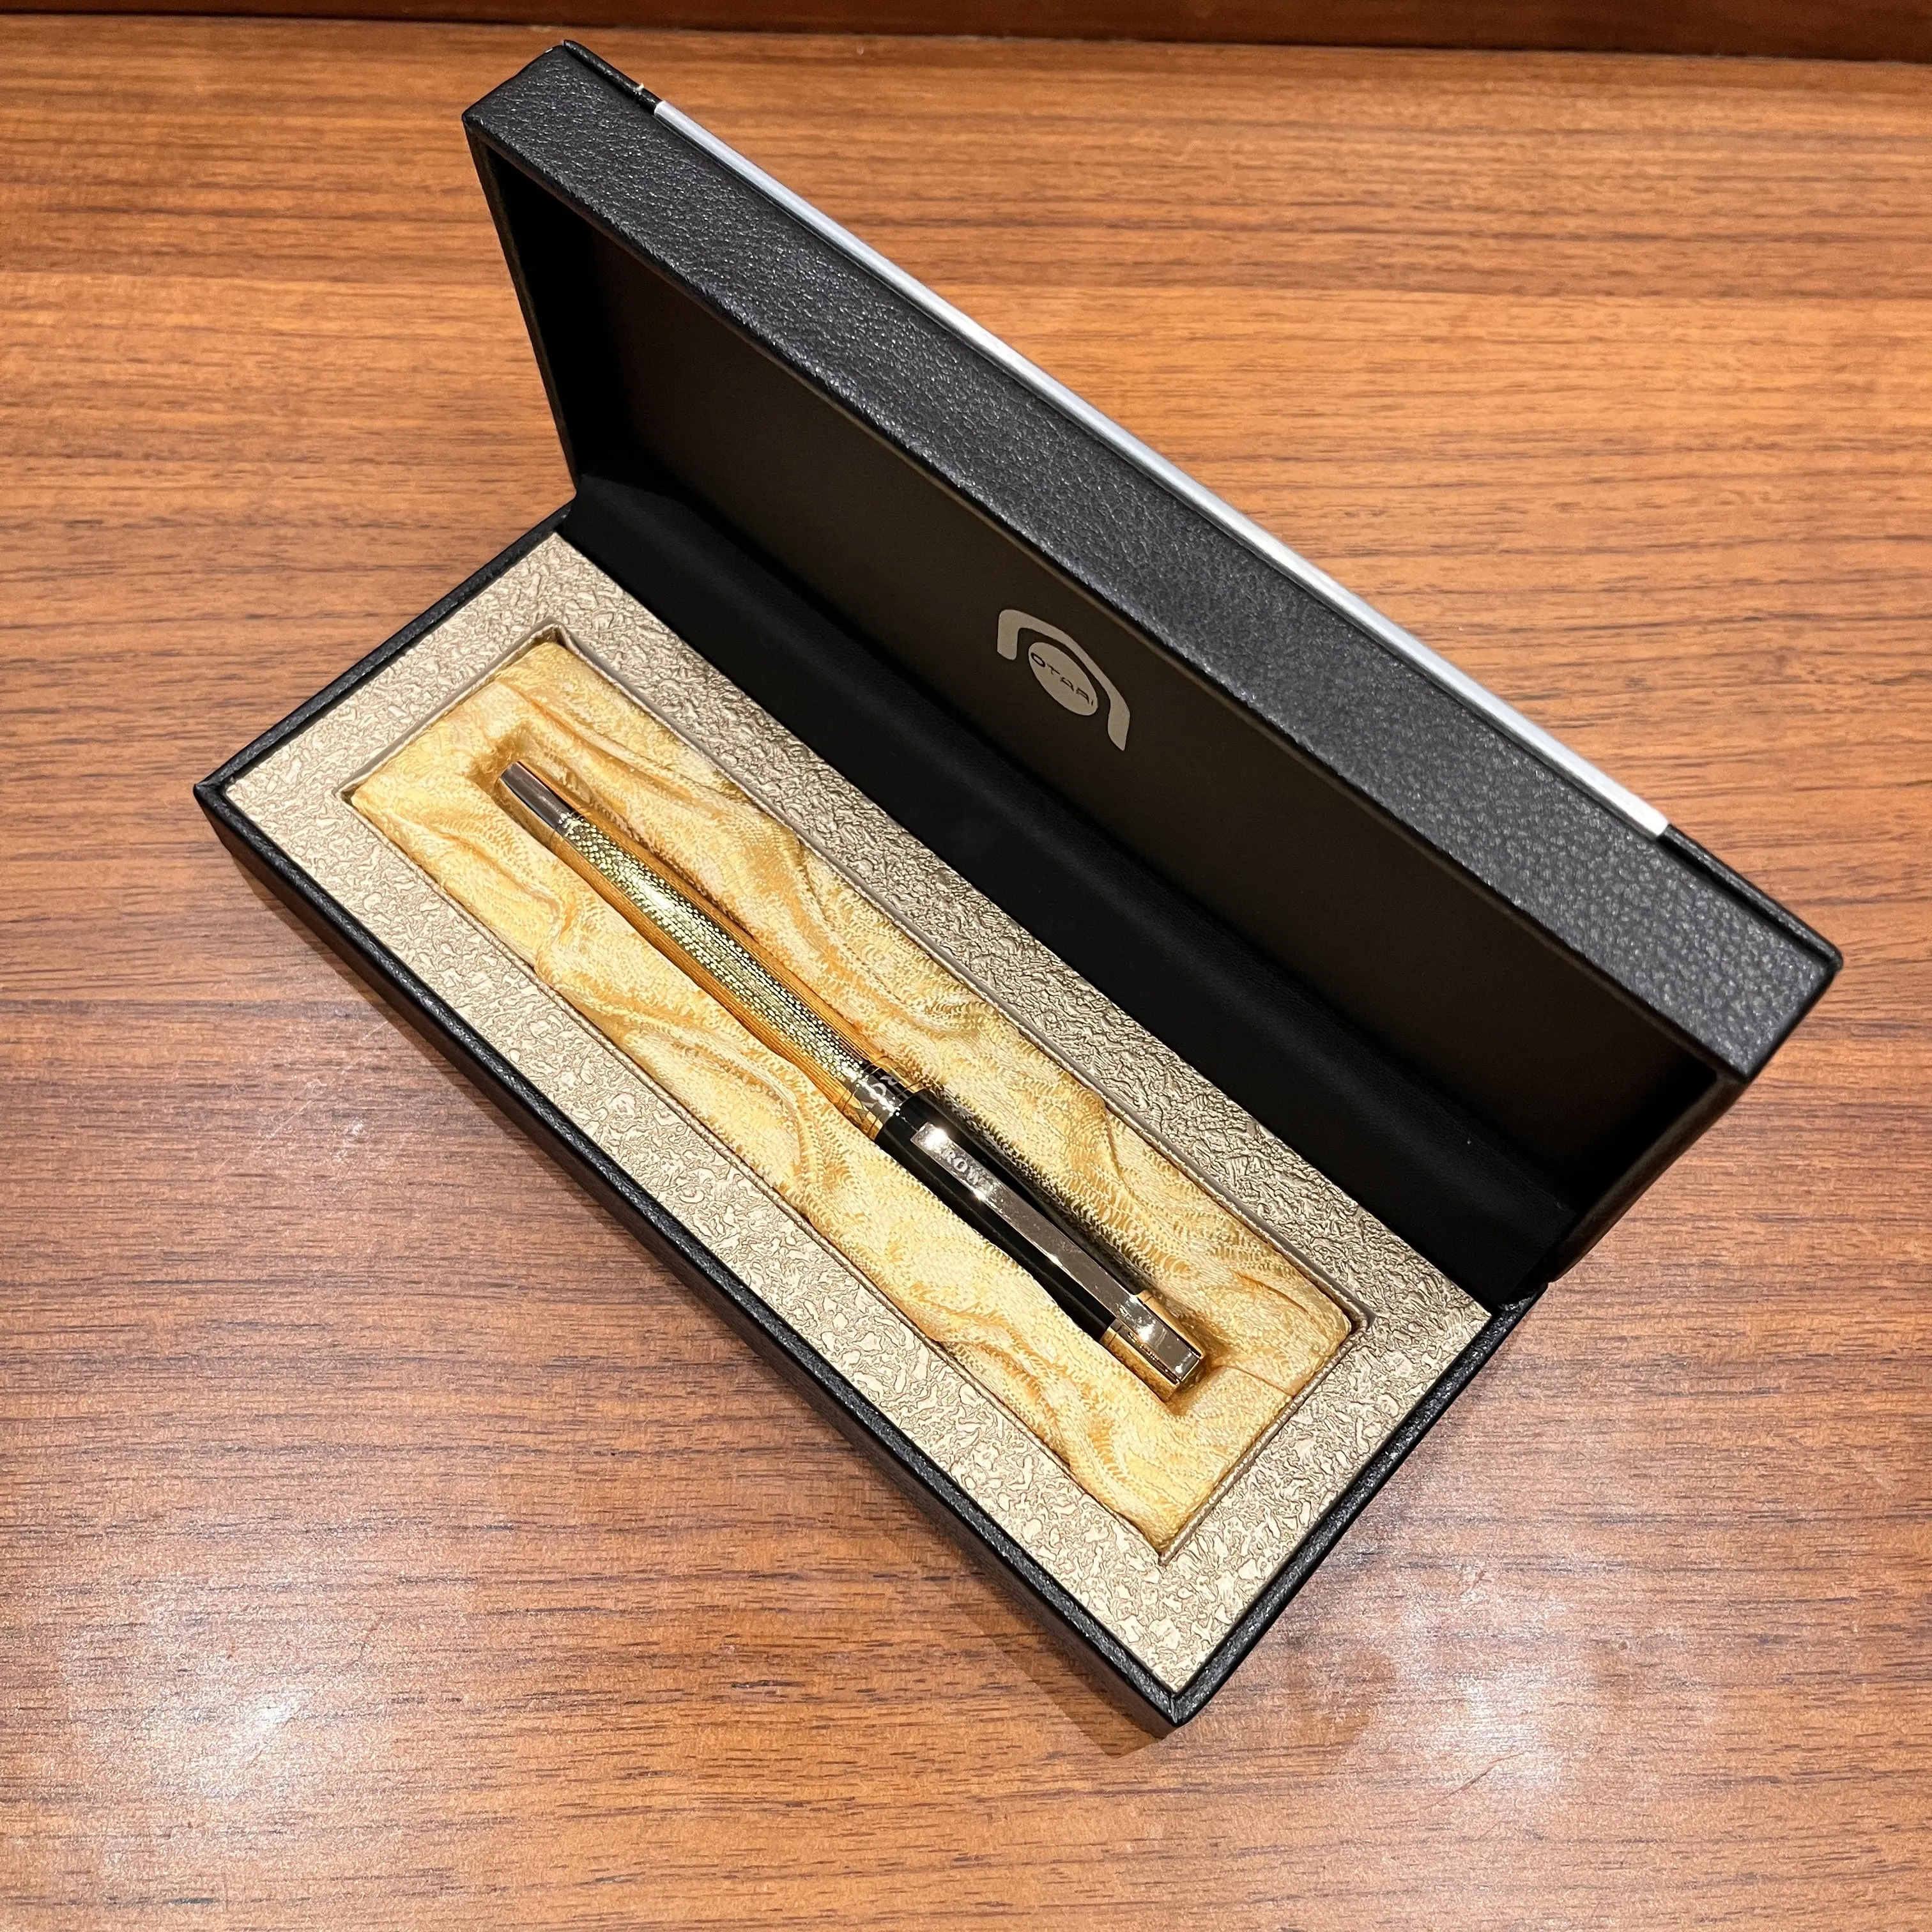 Profesional eksekutif kantor desain klasik pulpen pena Hadiah set perusahaan kustom pena bola warna emas